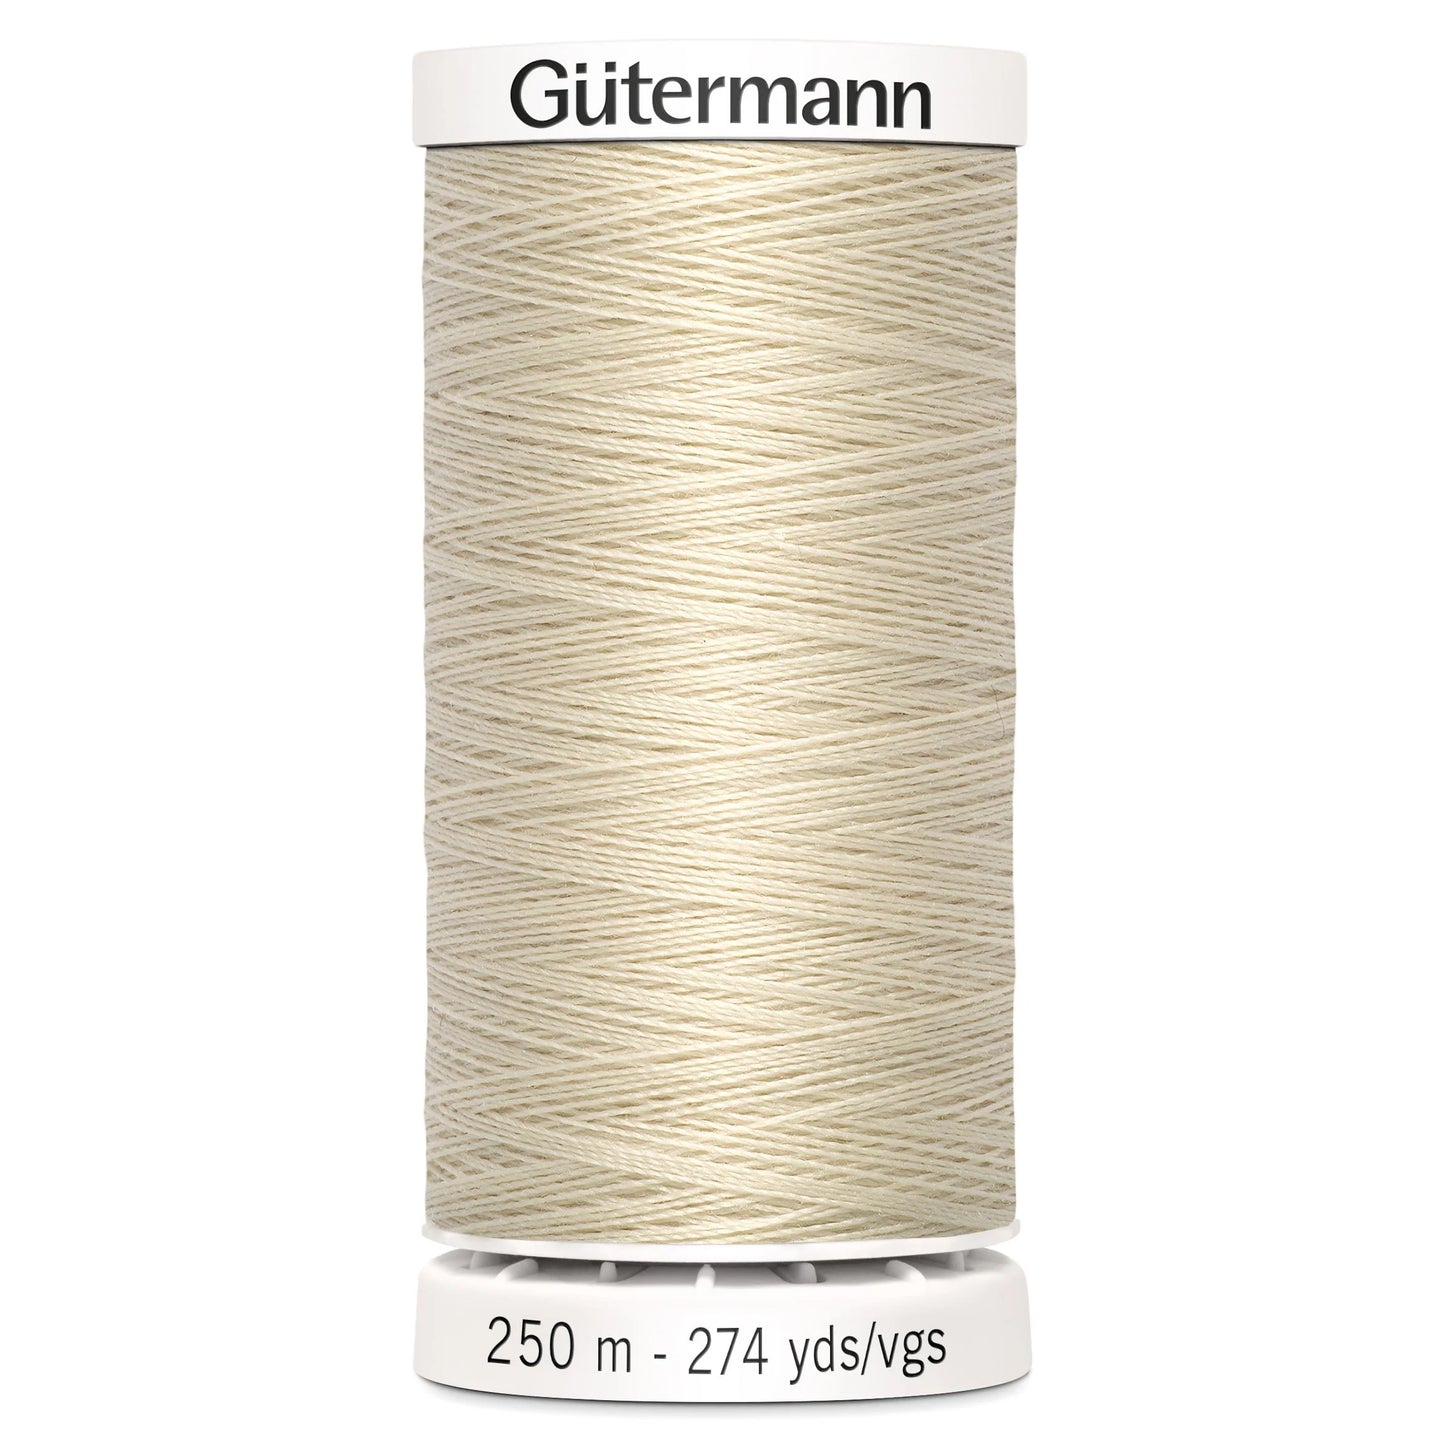 169 Gutermann Sew All 250m - Vellum